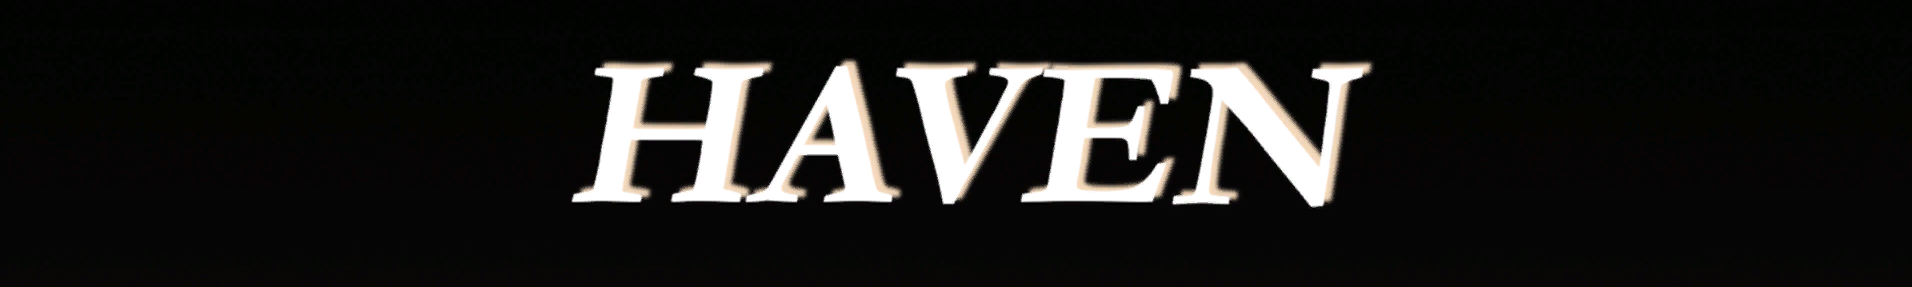 Haven - A Medieval Arcade Game